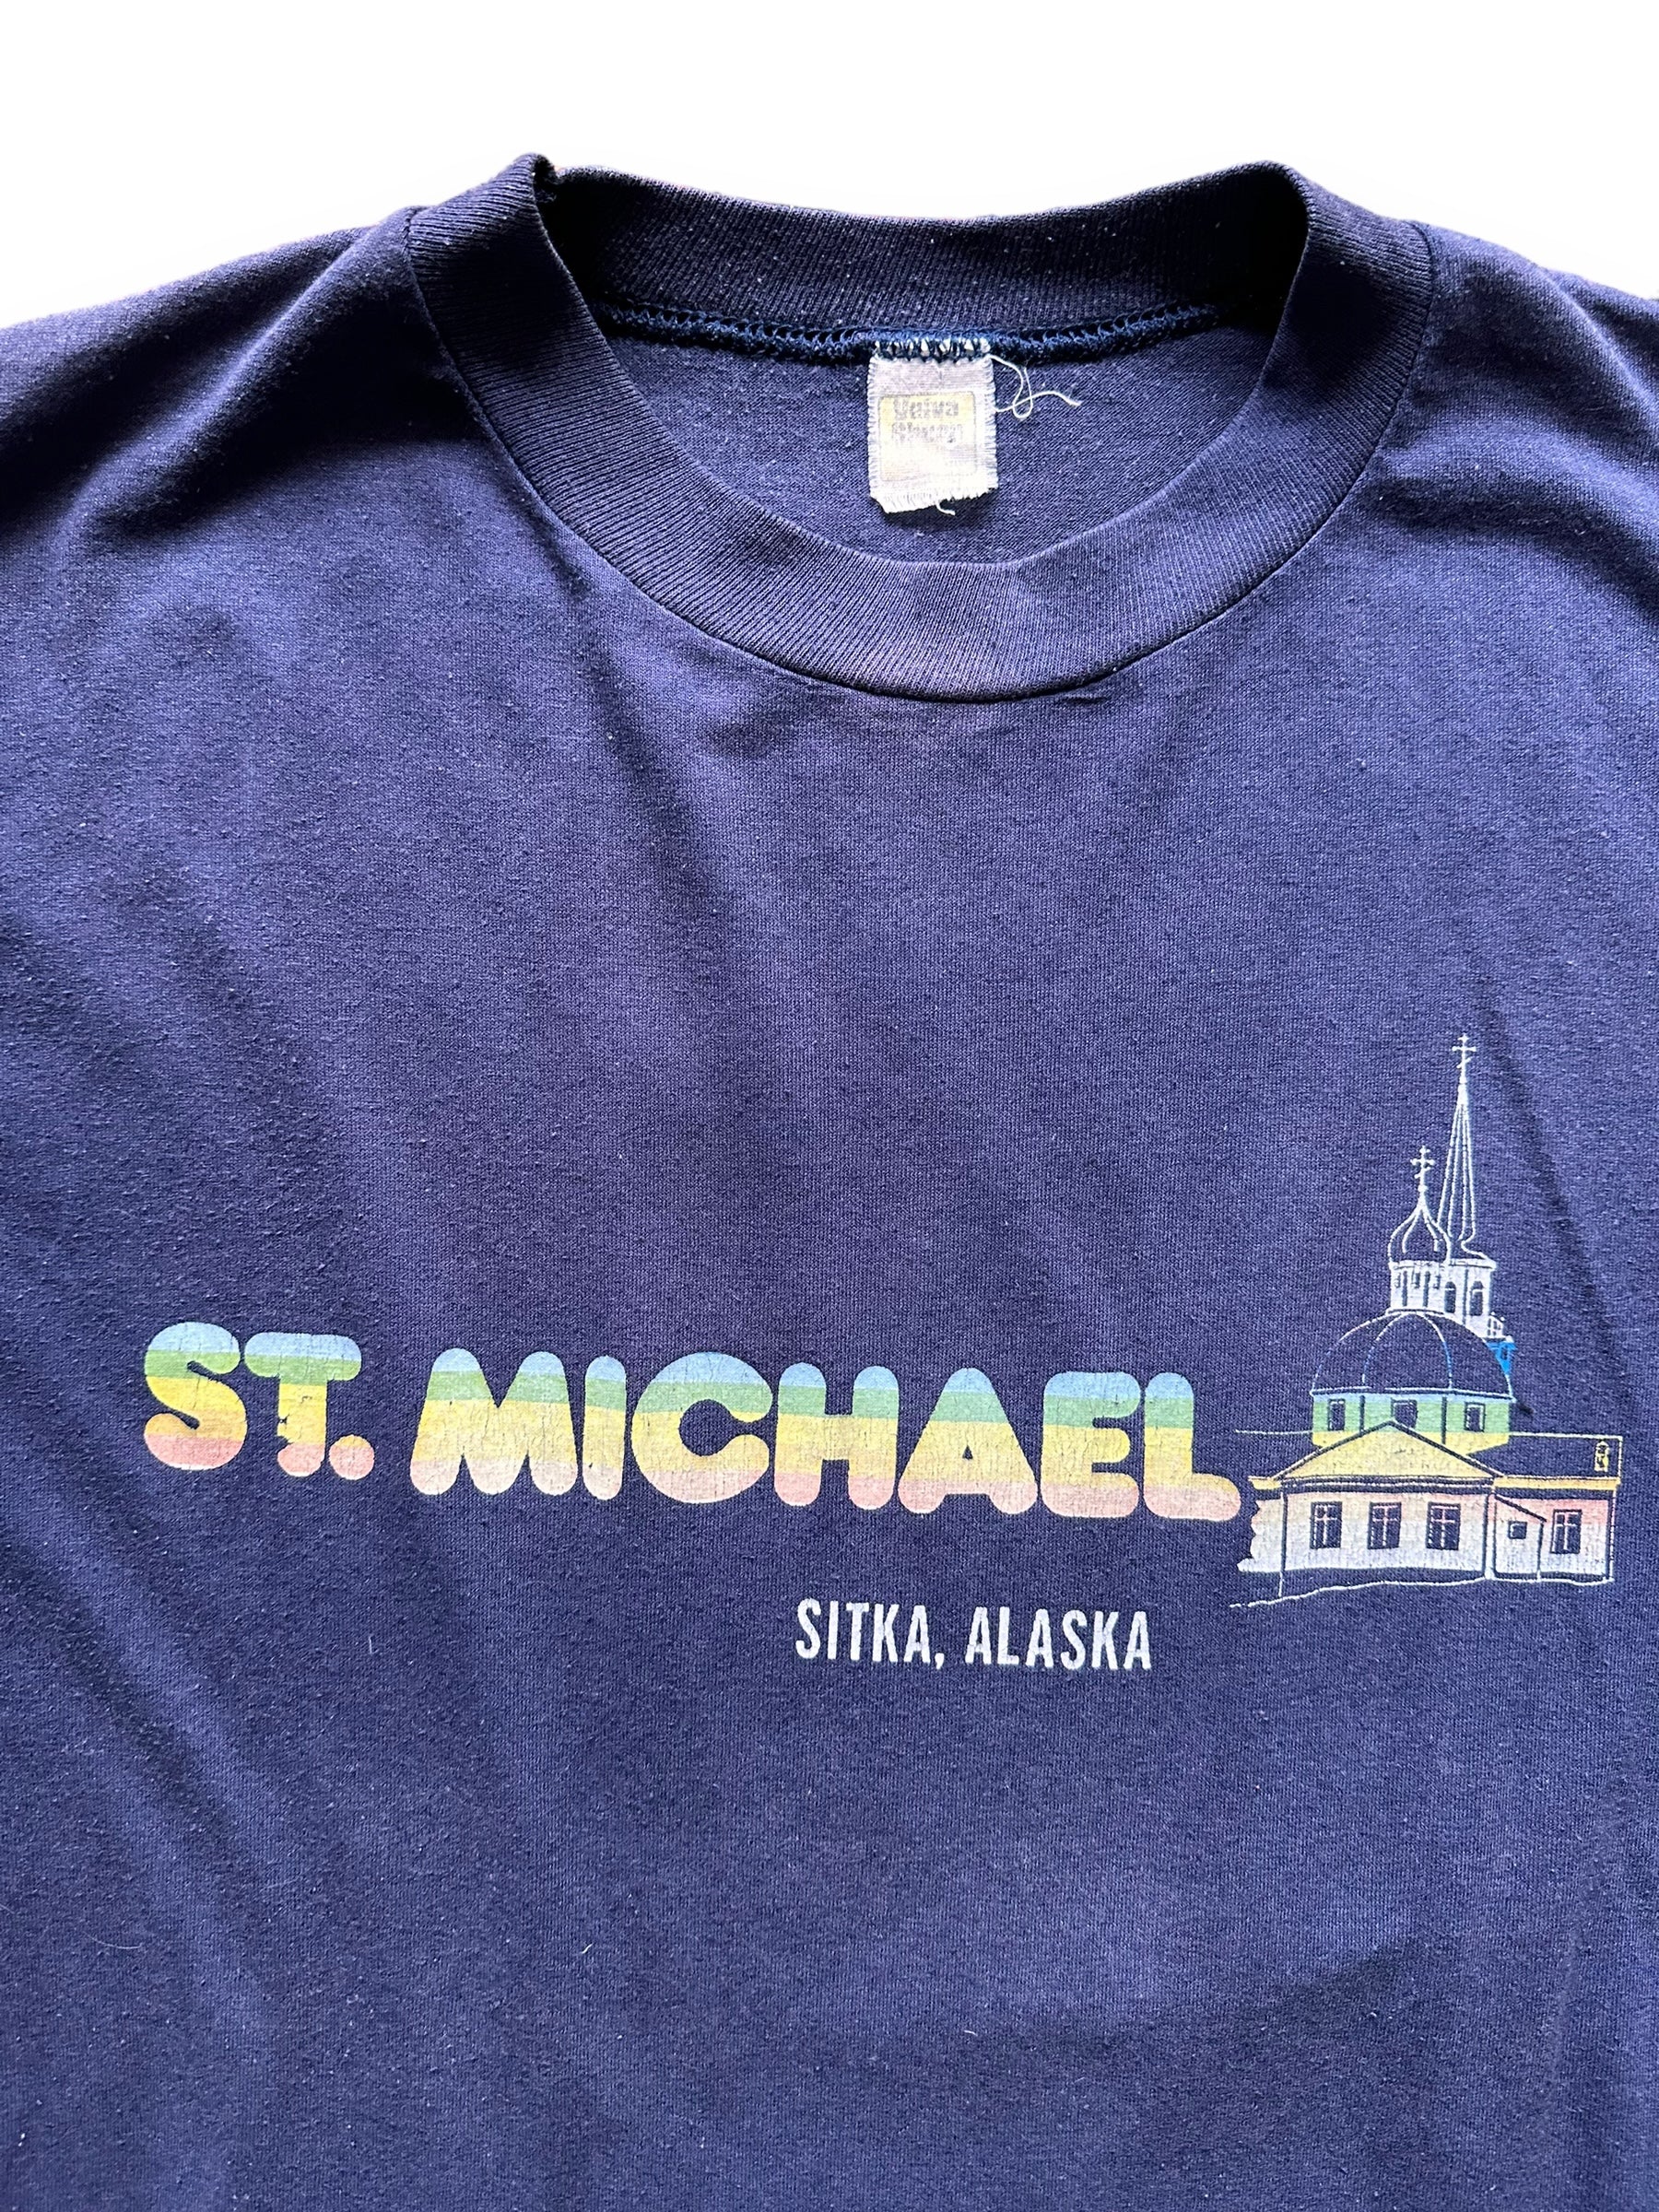 Front Graphic Detail on Vintage St. Michael's Sitka Alaska Tee SZ M | Vintage Alaska T-Shirts Seattle | Barn Owl Vintage Clothing Seattle